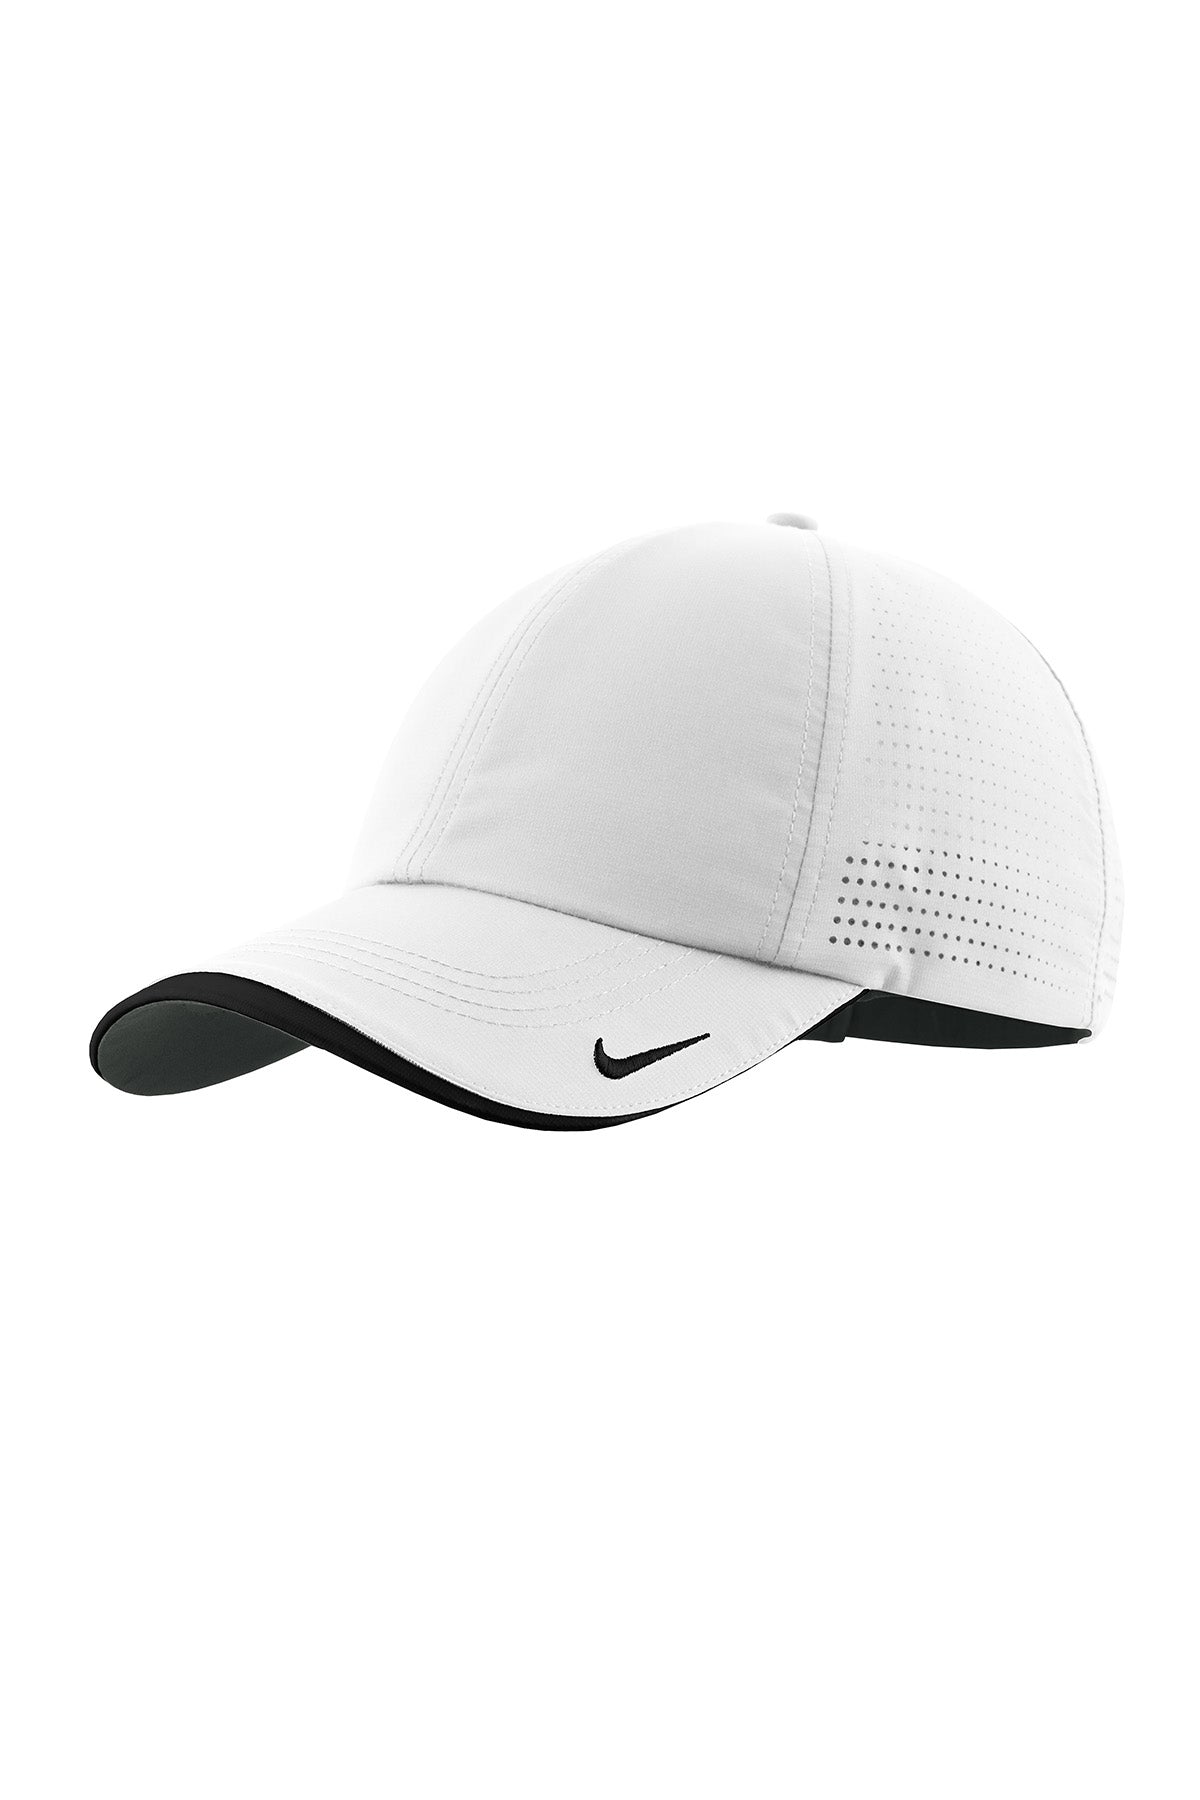 White Custom Nike Dri-FIT Swoosh Perforated Cap